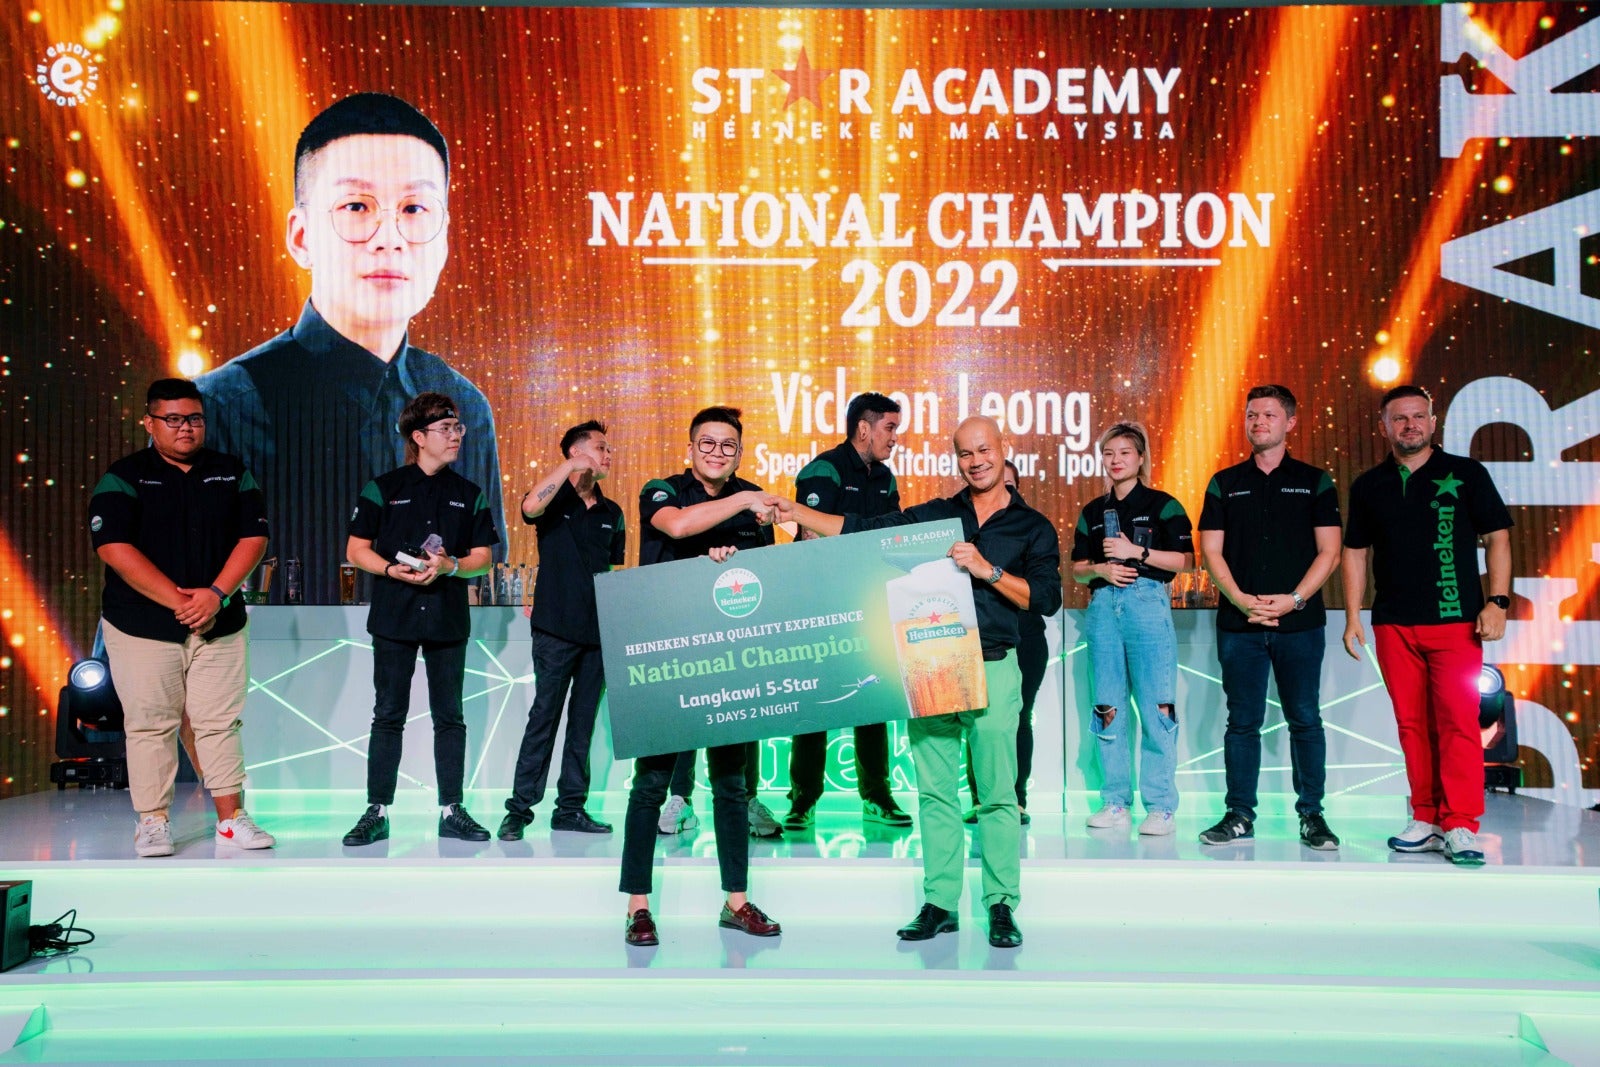 Vickson Leong Perak Heineken Star Quality National Champion 2